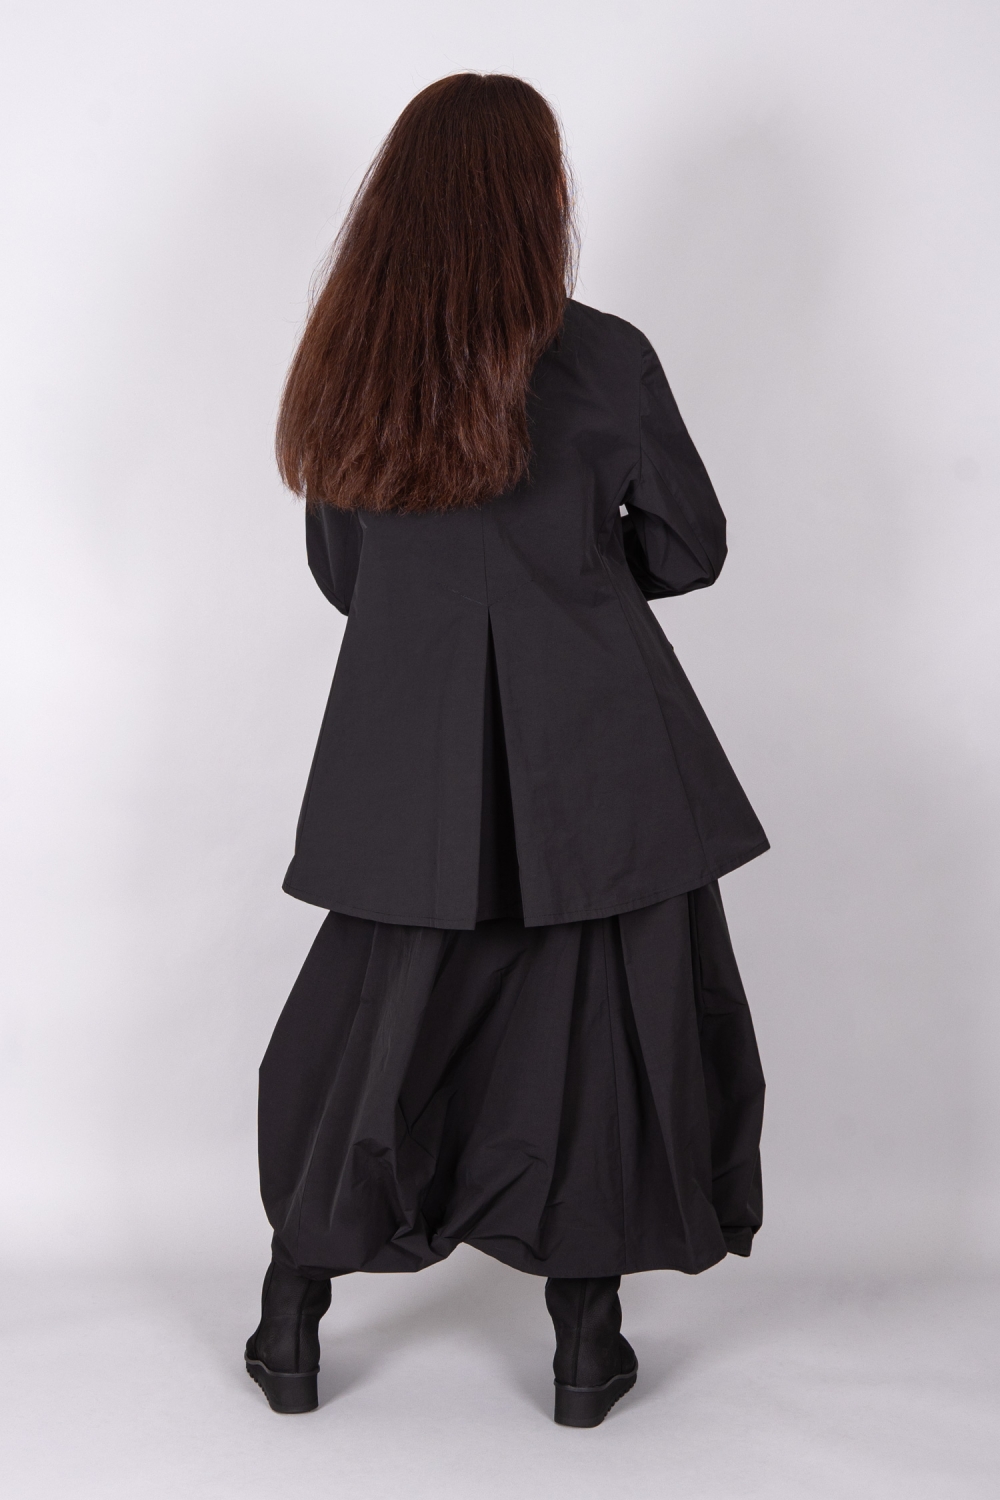 Eltony Jacke in A-Form aus Baumwolltaft in schwarz